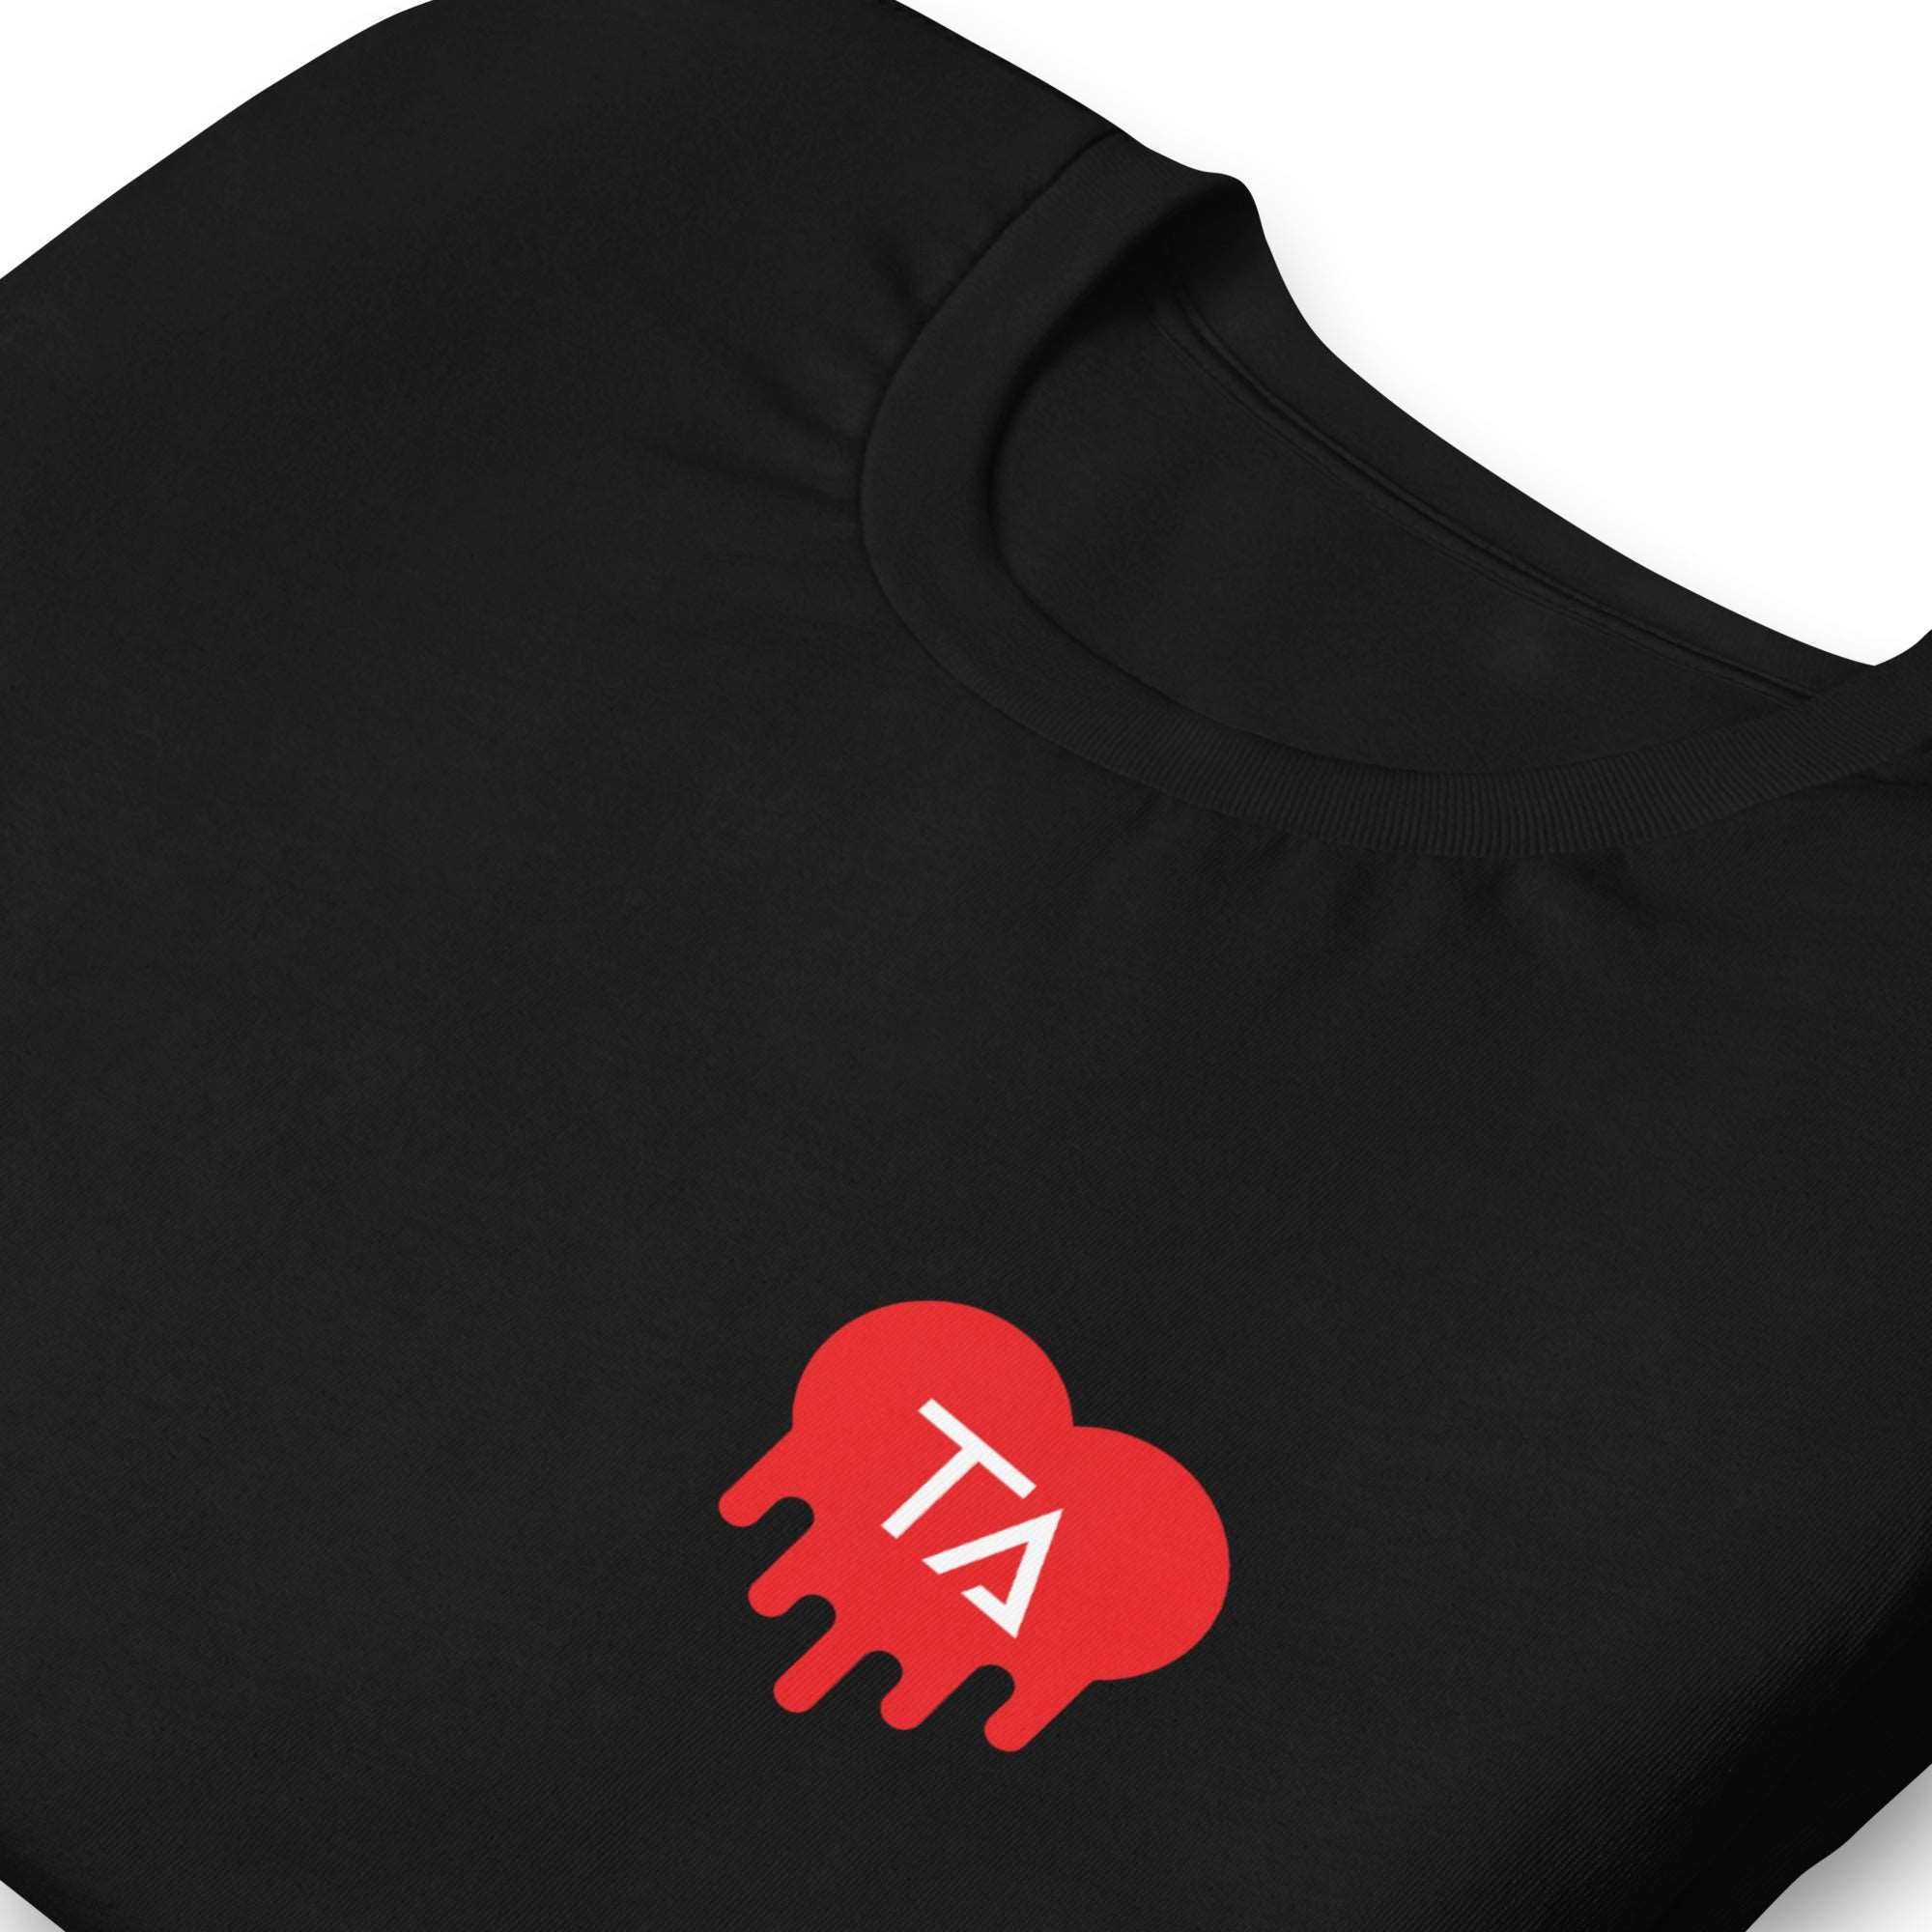 Computer Love T-shirt (Black)